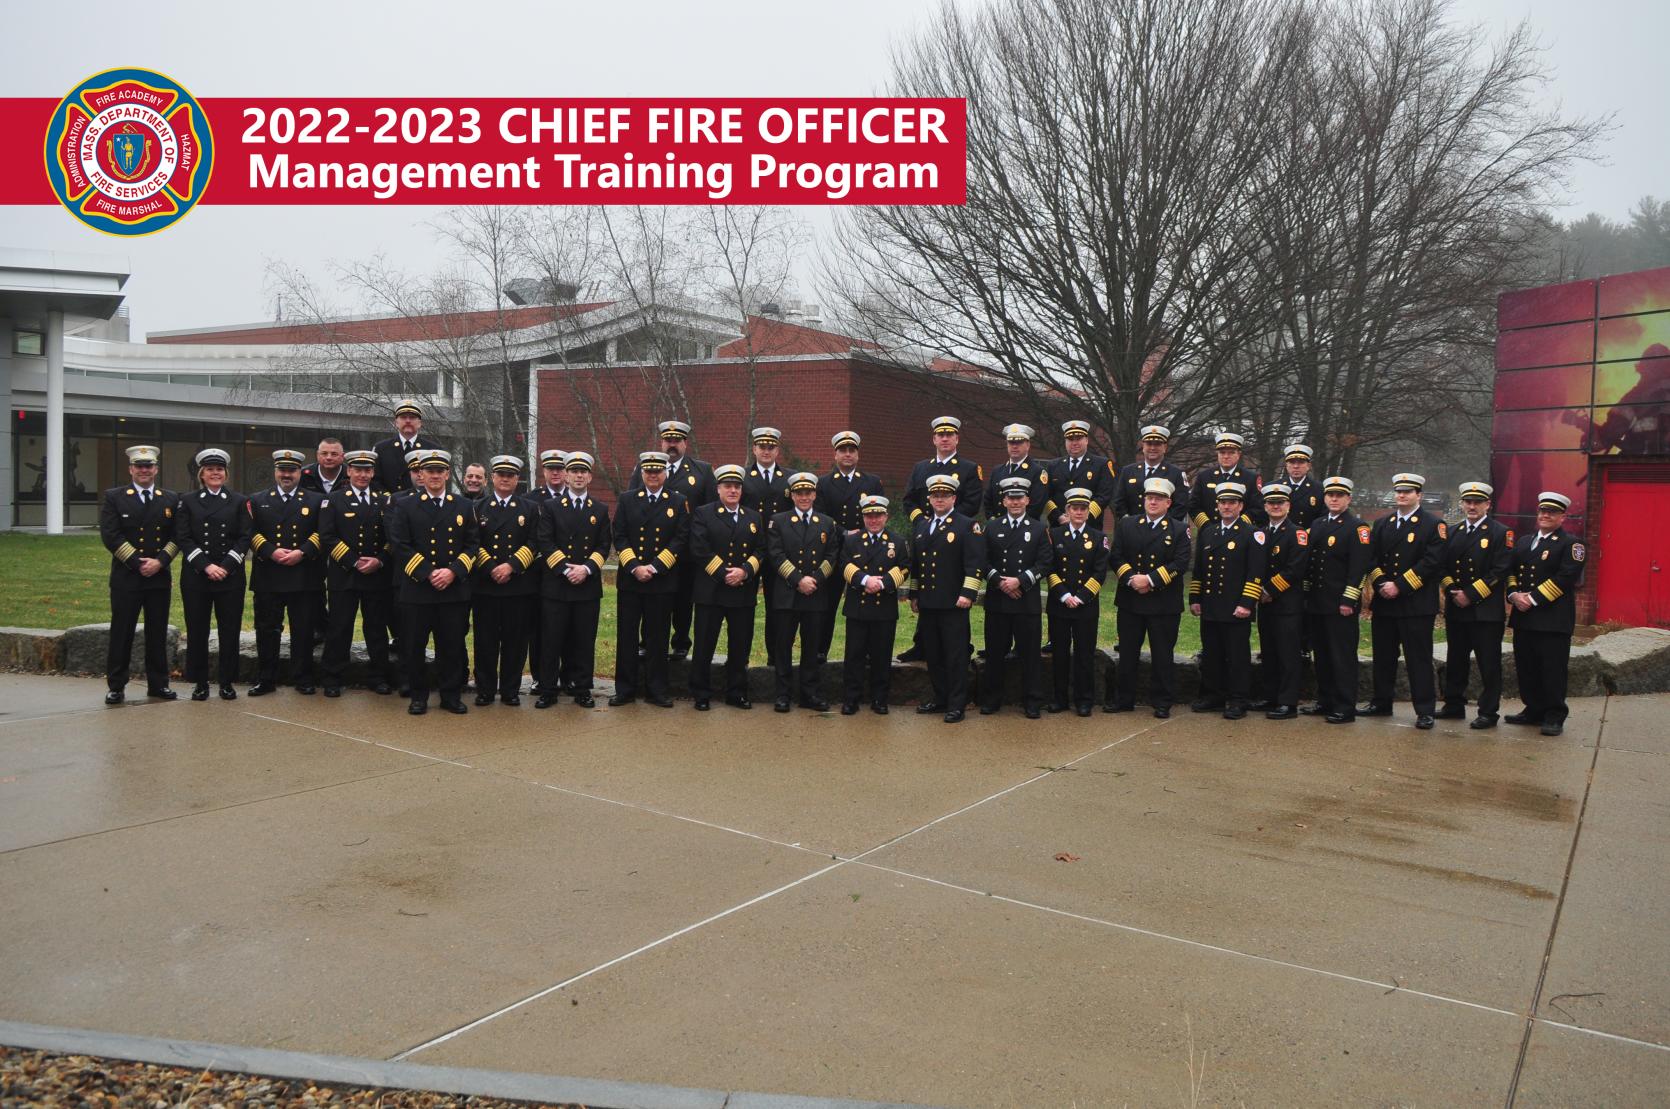 37 senior fire officers in dress uniforms